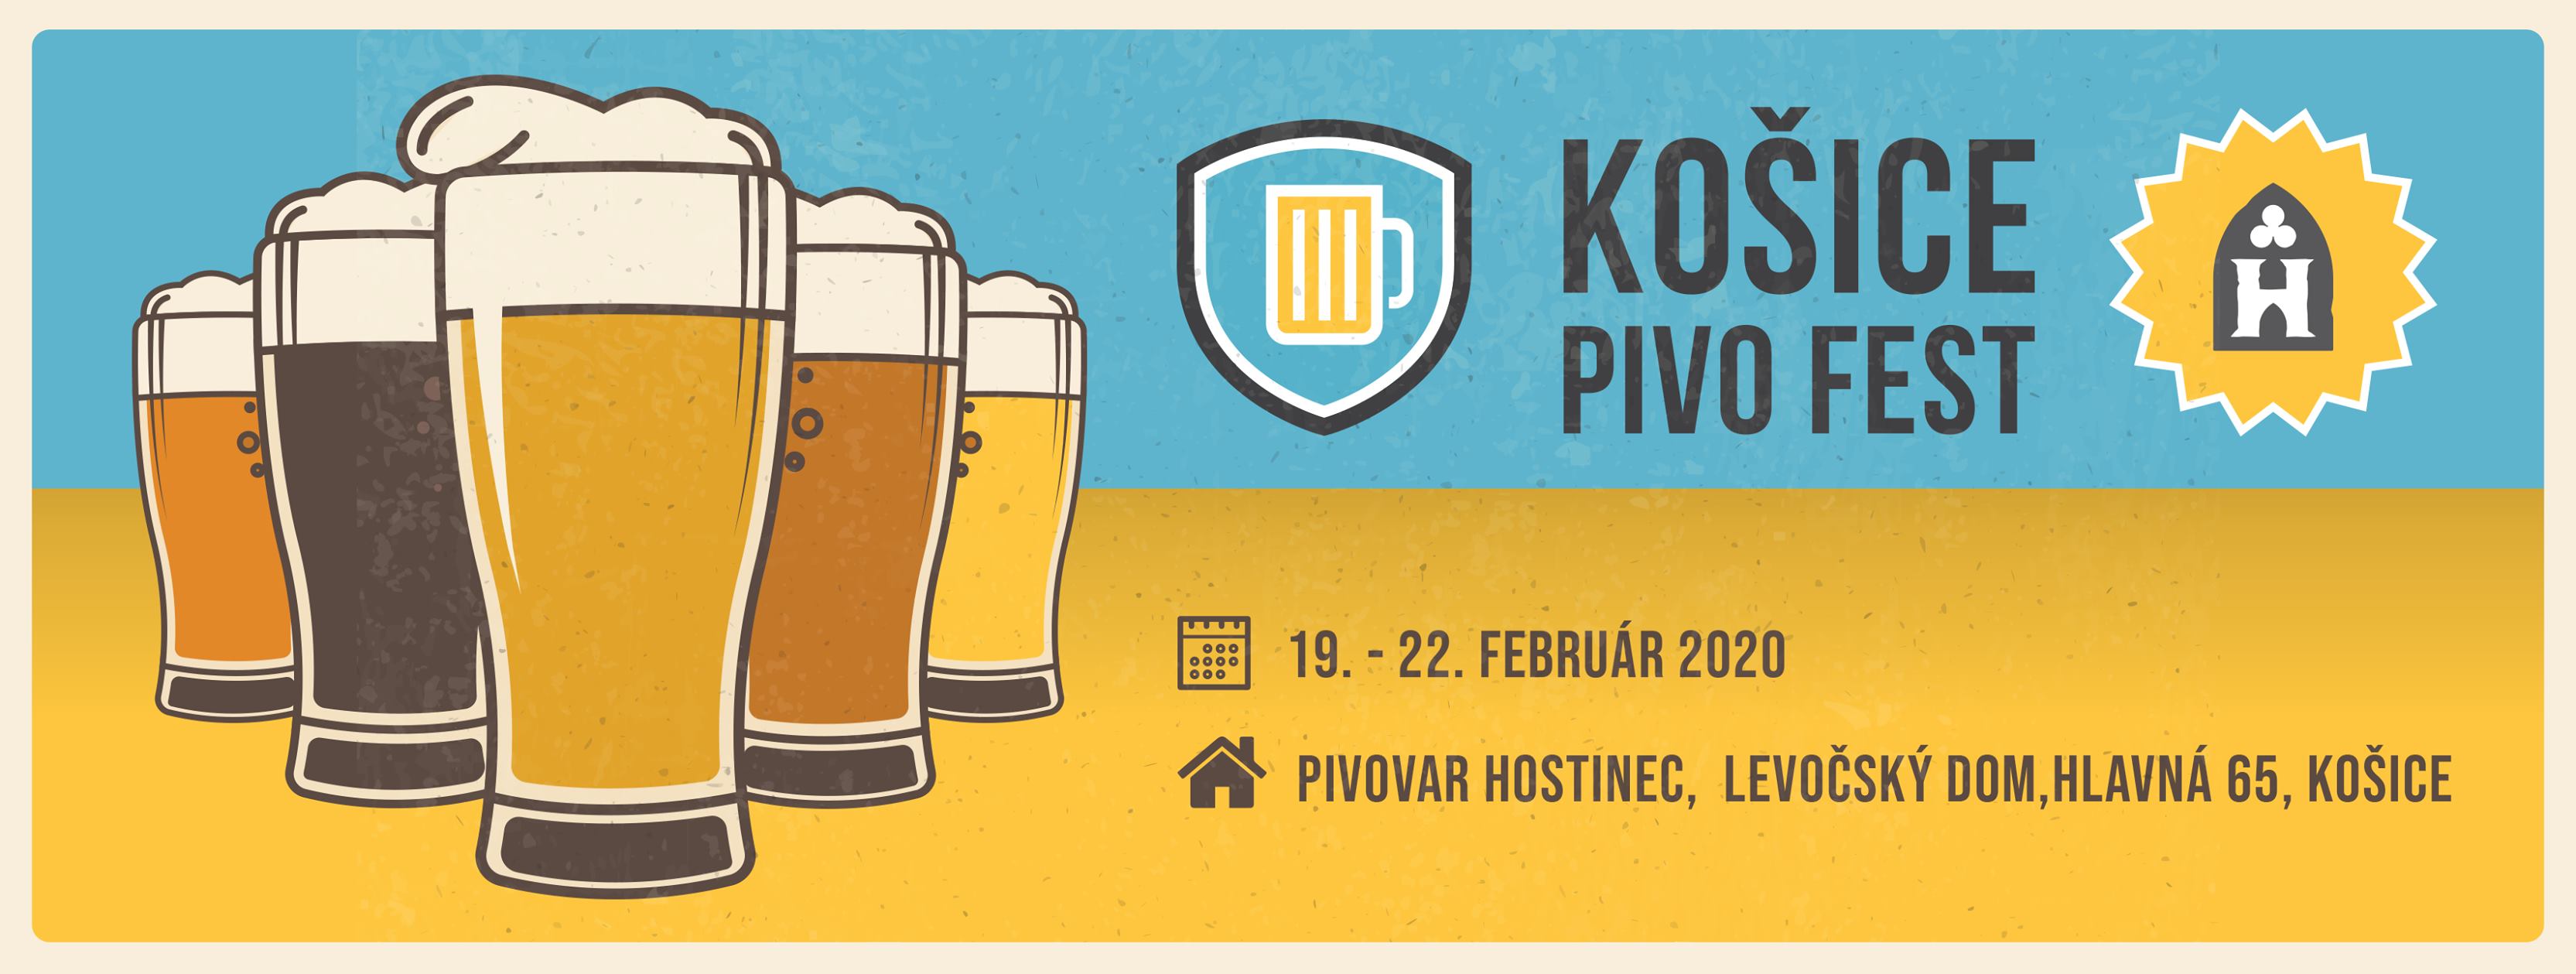 Koice Pivo Fest 2020 - 8. ronk